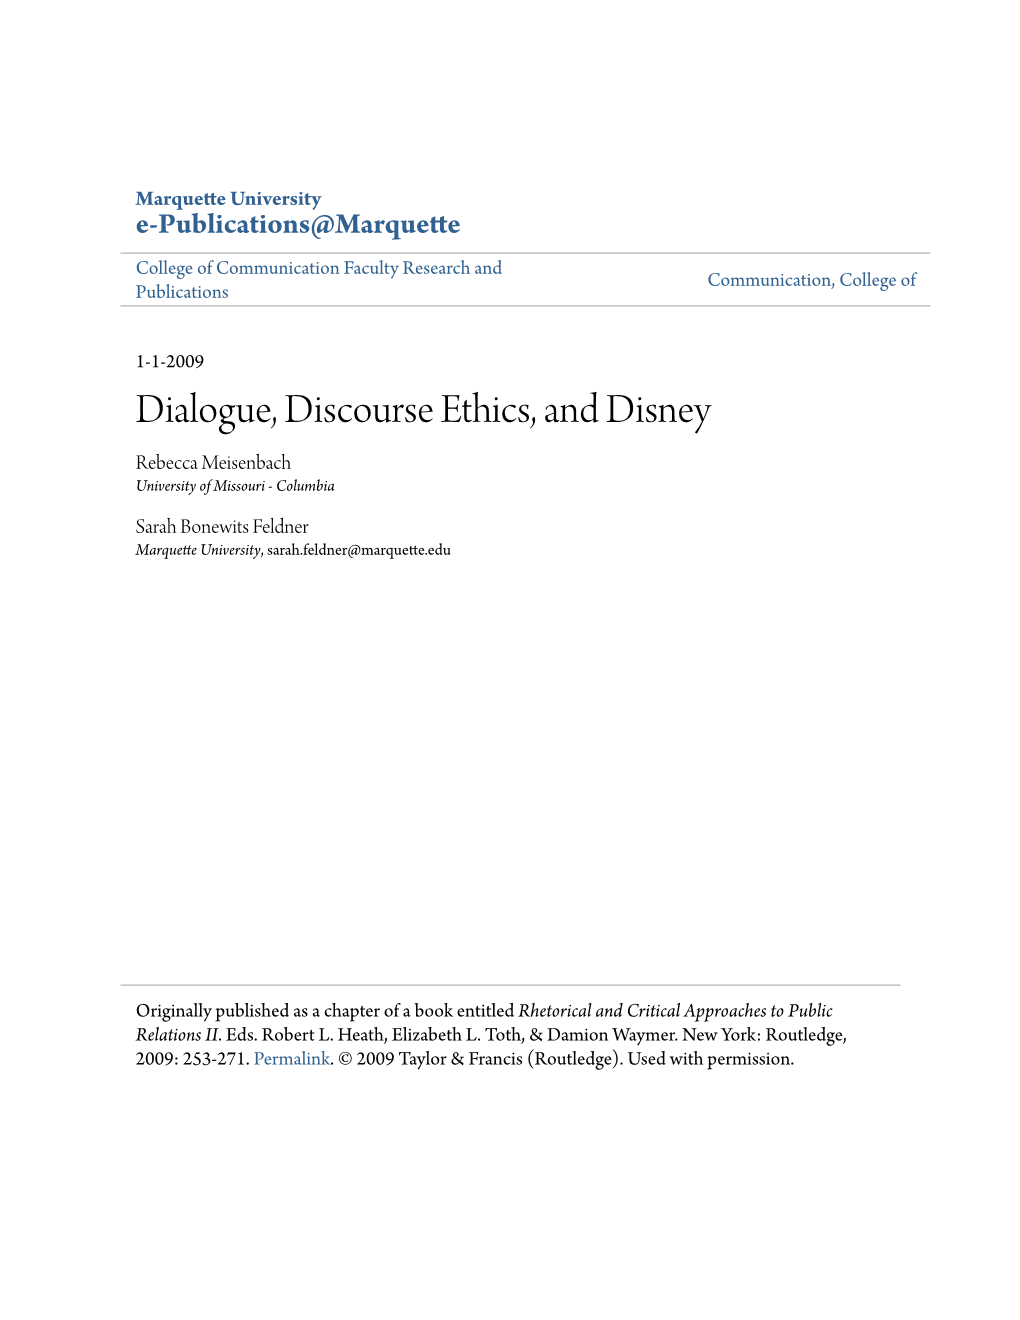 Dialogue, Discourse Ethics, and Disney Rebecca Meisenbach University of Missouri - Columbia